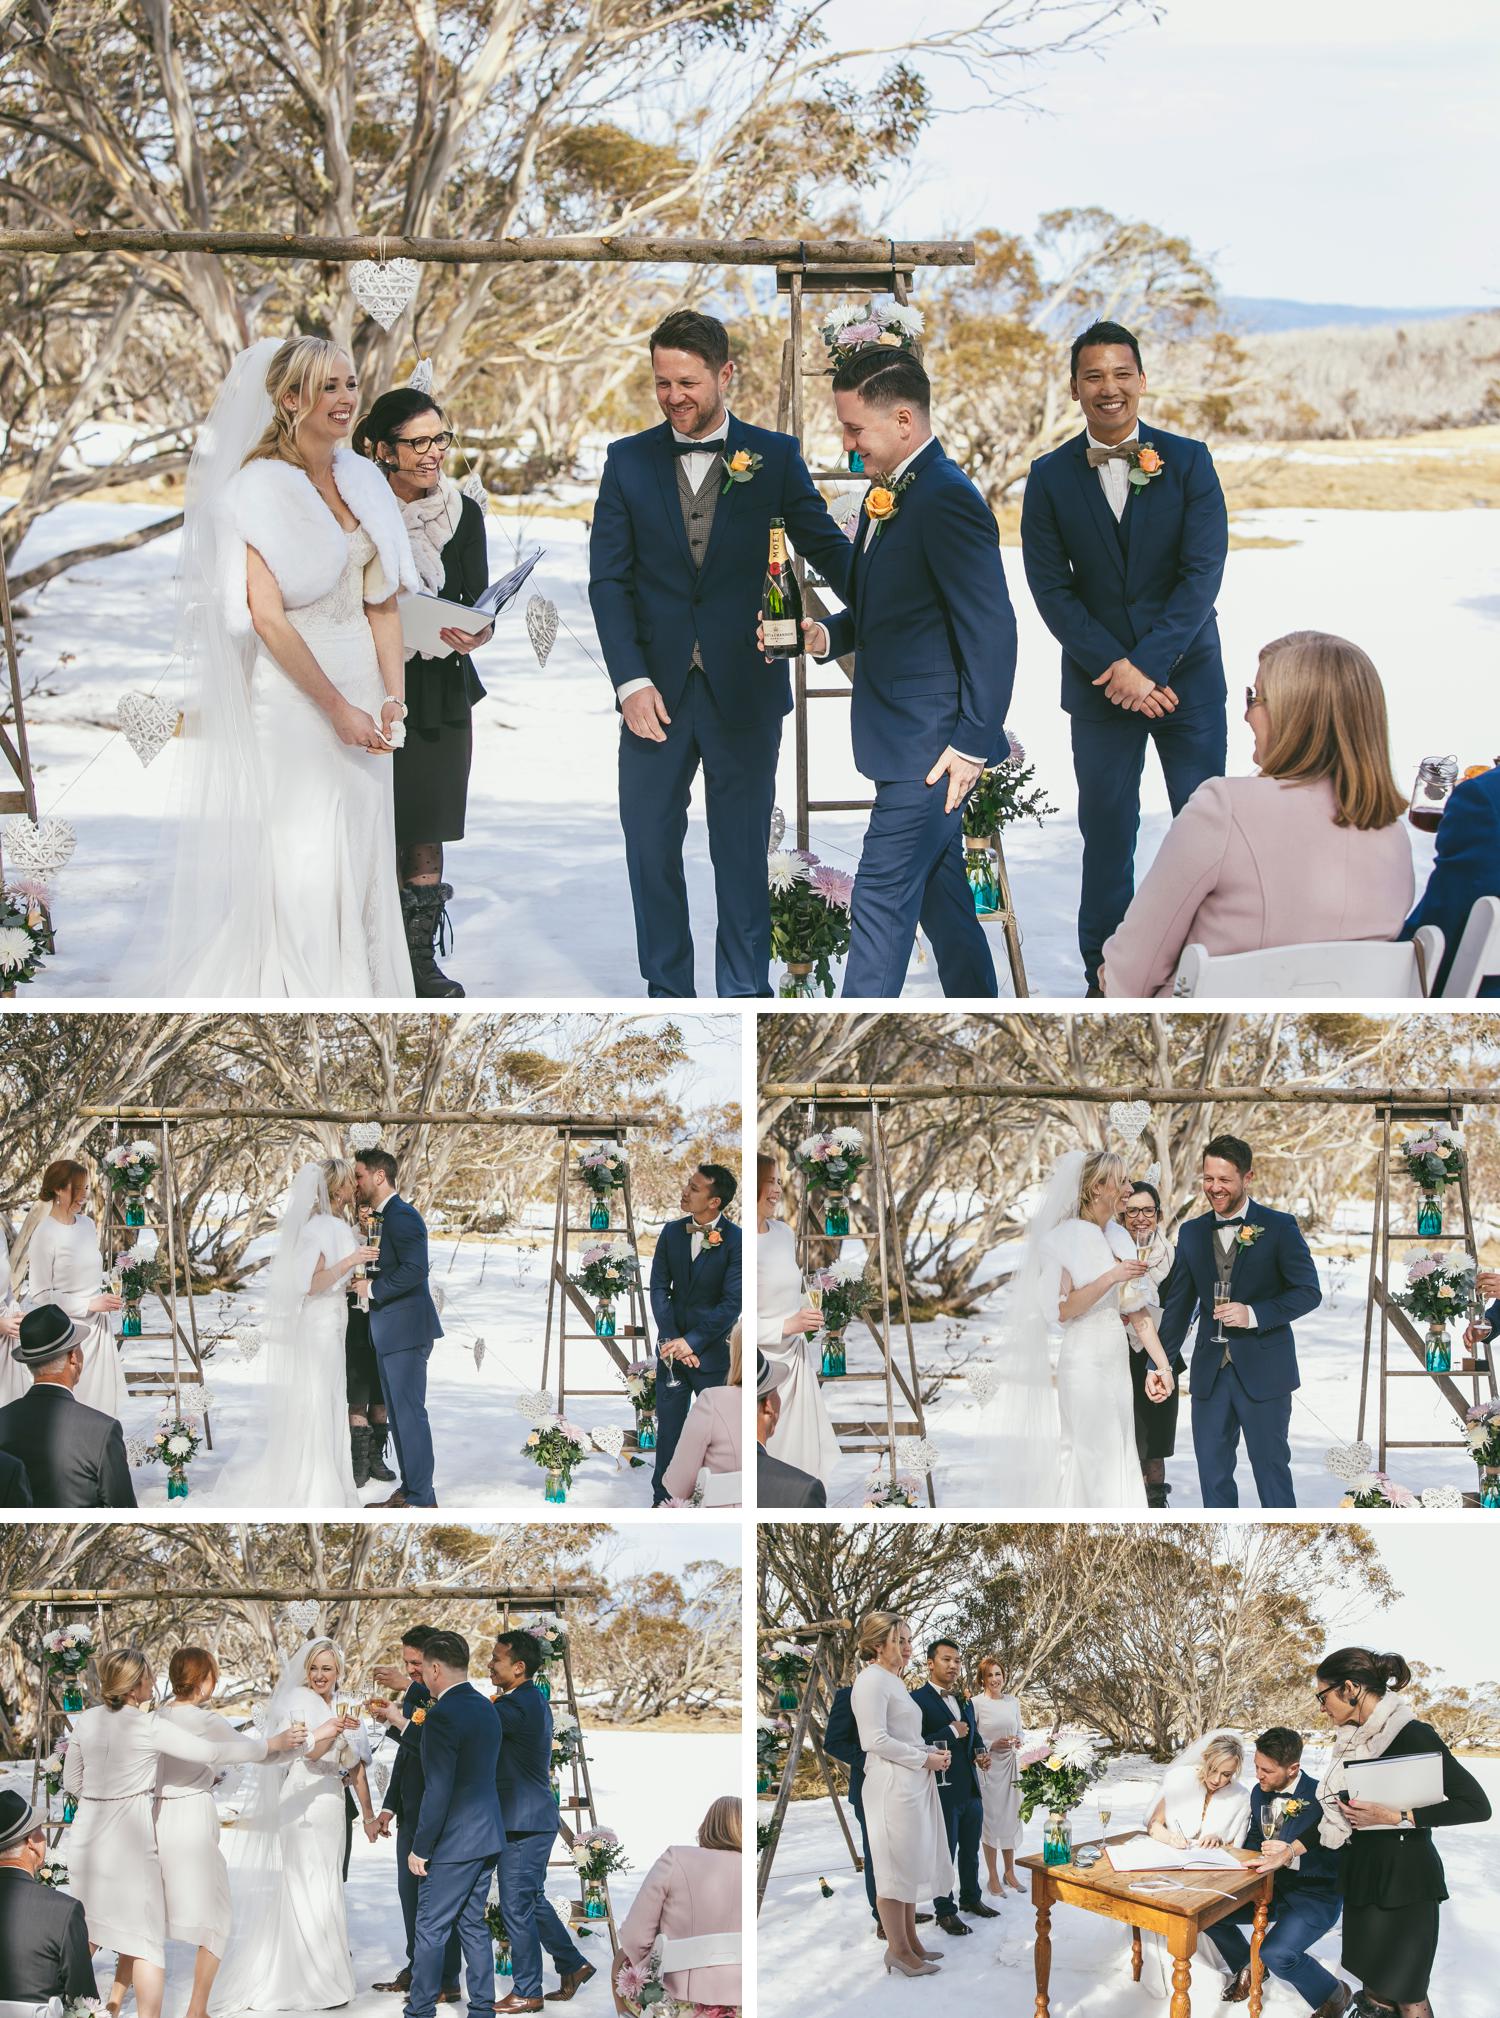 Rundells Alpine Lodge Wedding, Snow Wedding Photos, Beautiful Wedding Photos by Danae Studios